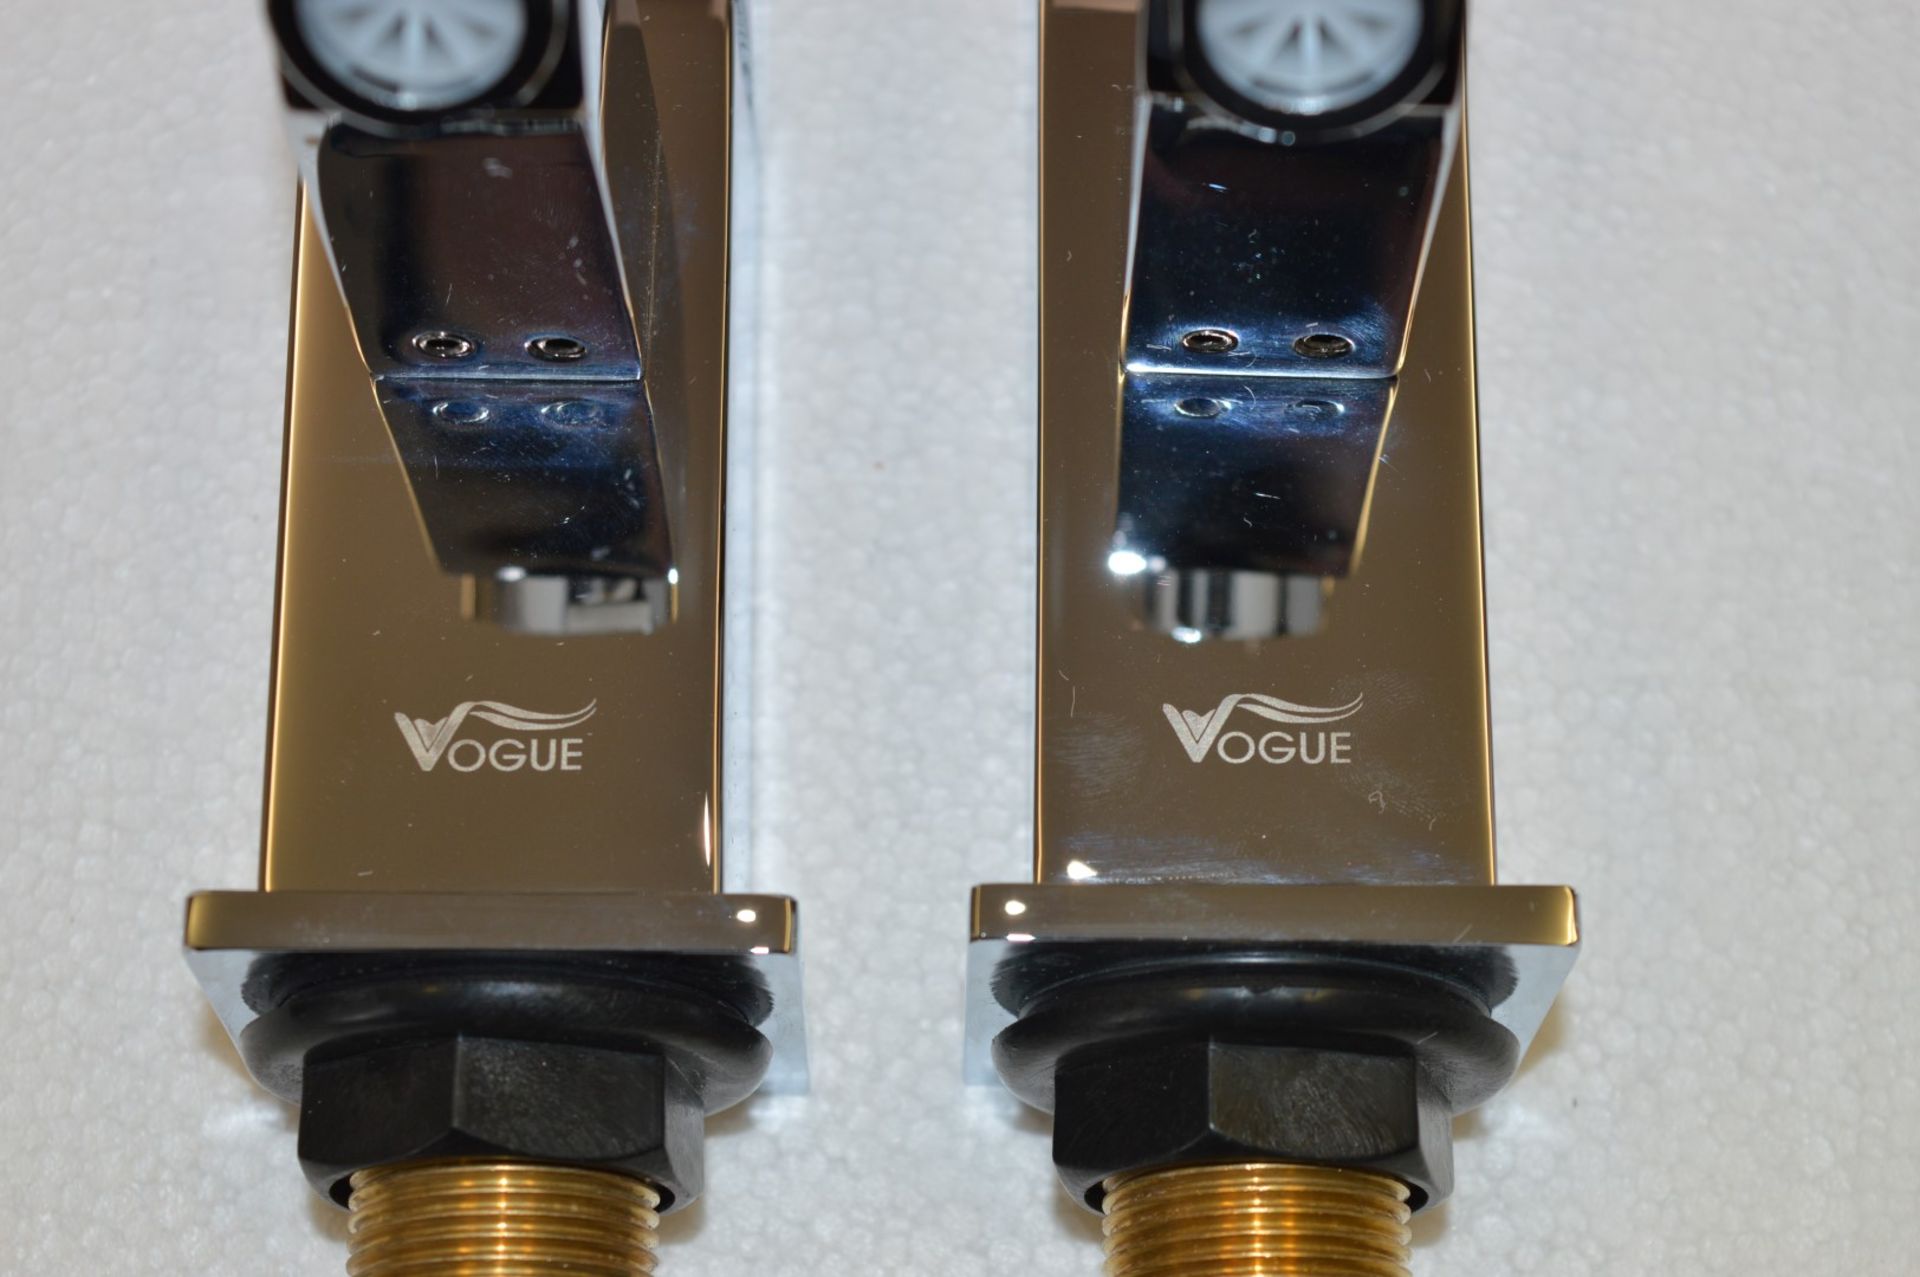 1 x Vogue Series 3 Bath Taps in Chrome (Pair) - Modern Bath Mixer Tap in Bright Chrome - High - Image 4 of 9